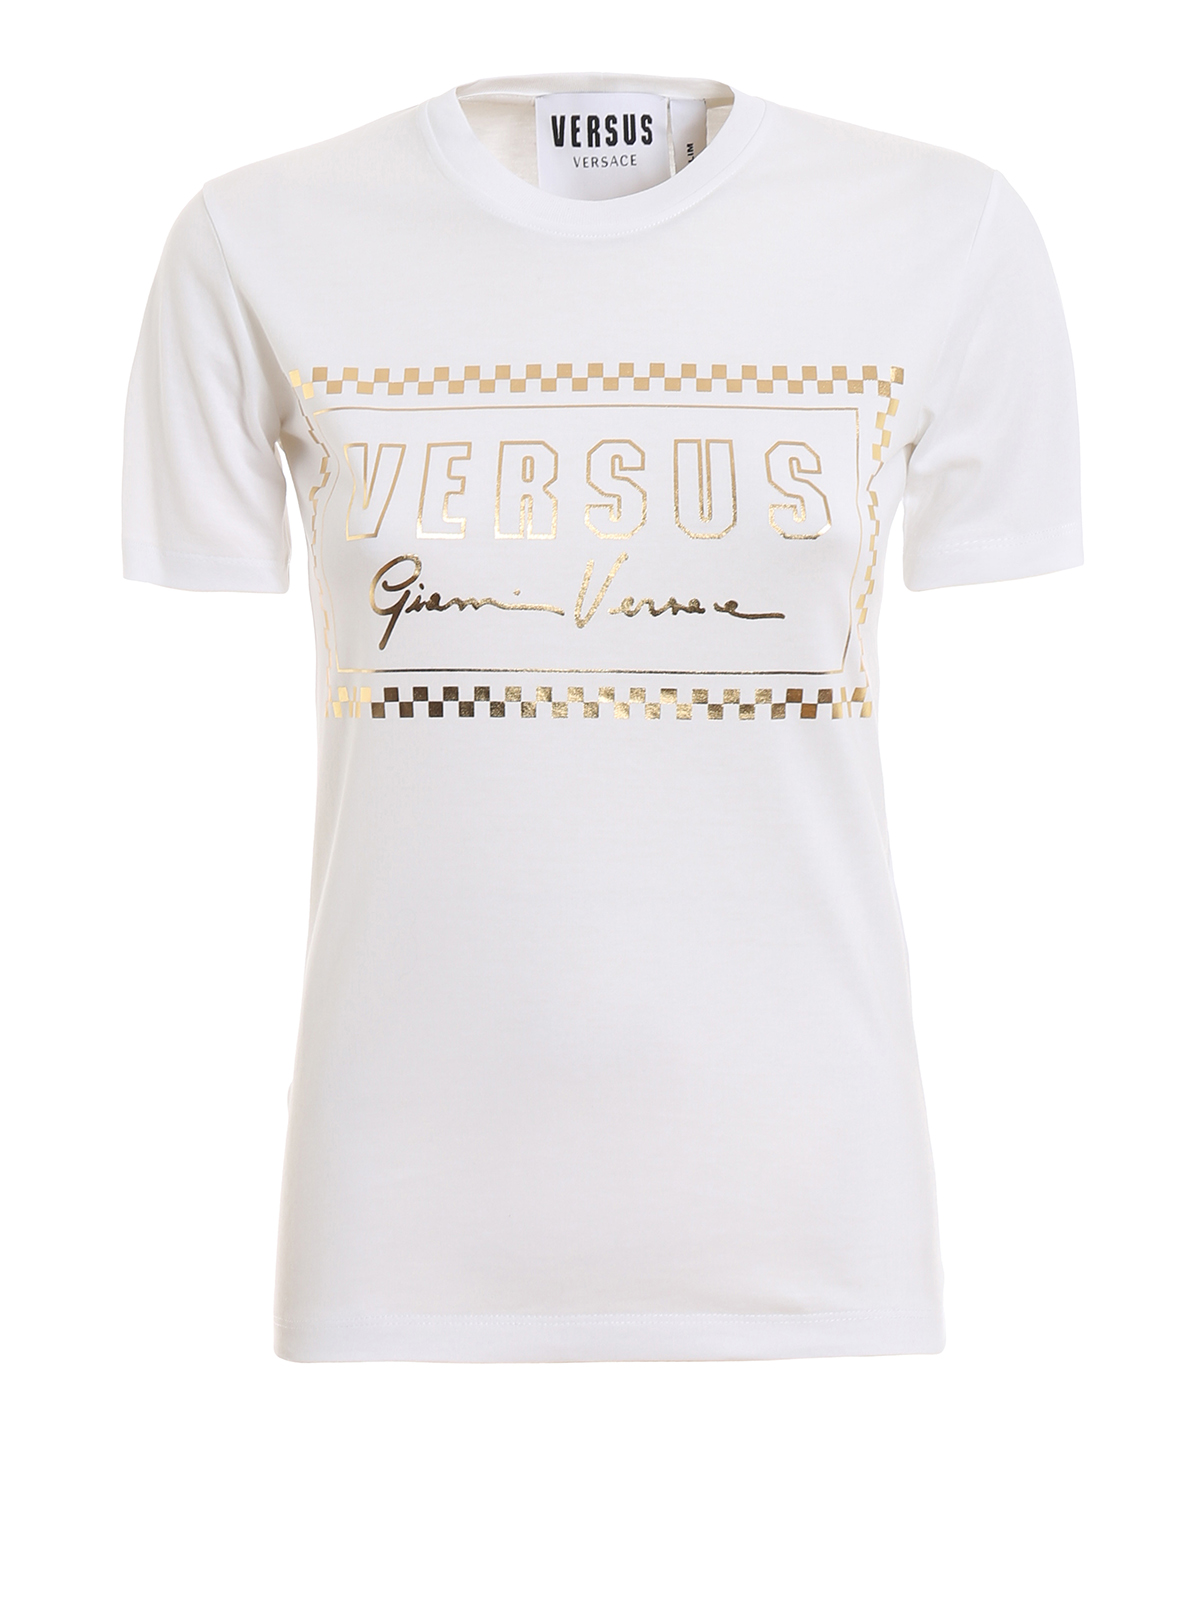 Transistor Honderd jaar handelaar T-shirts Versus Versace - Versus Gianni Versace 90s white Tee -  BD90682BJ10388B1001